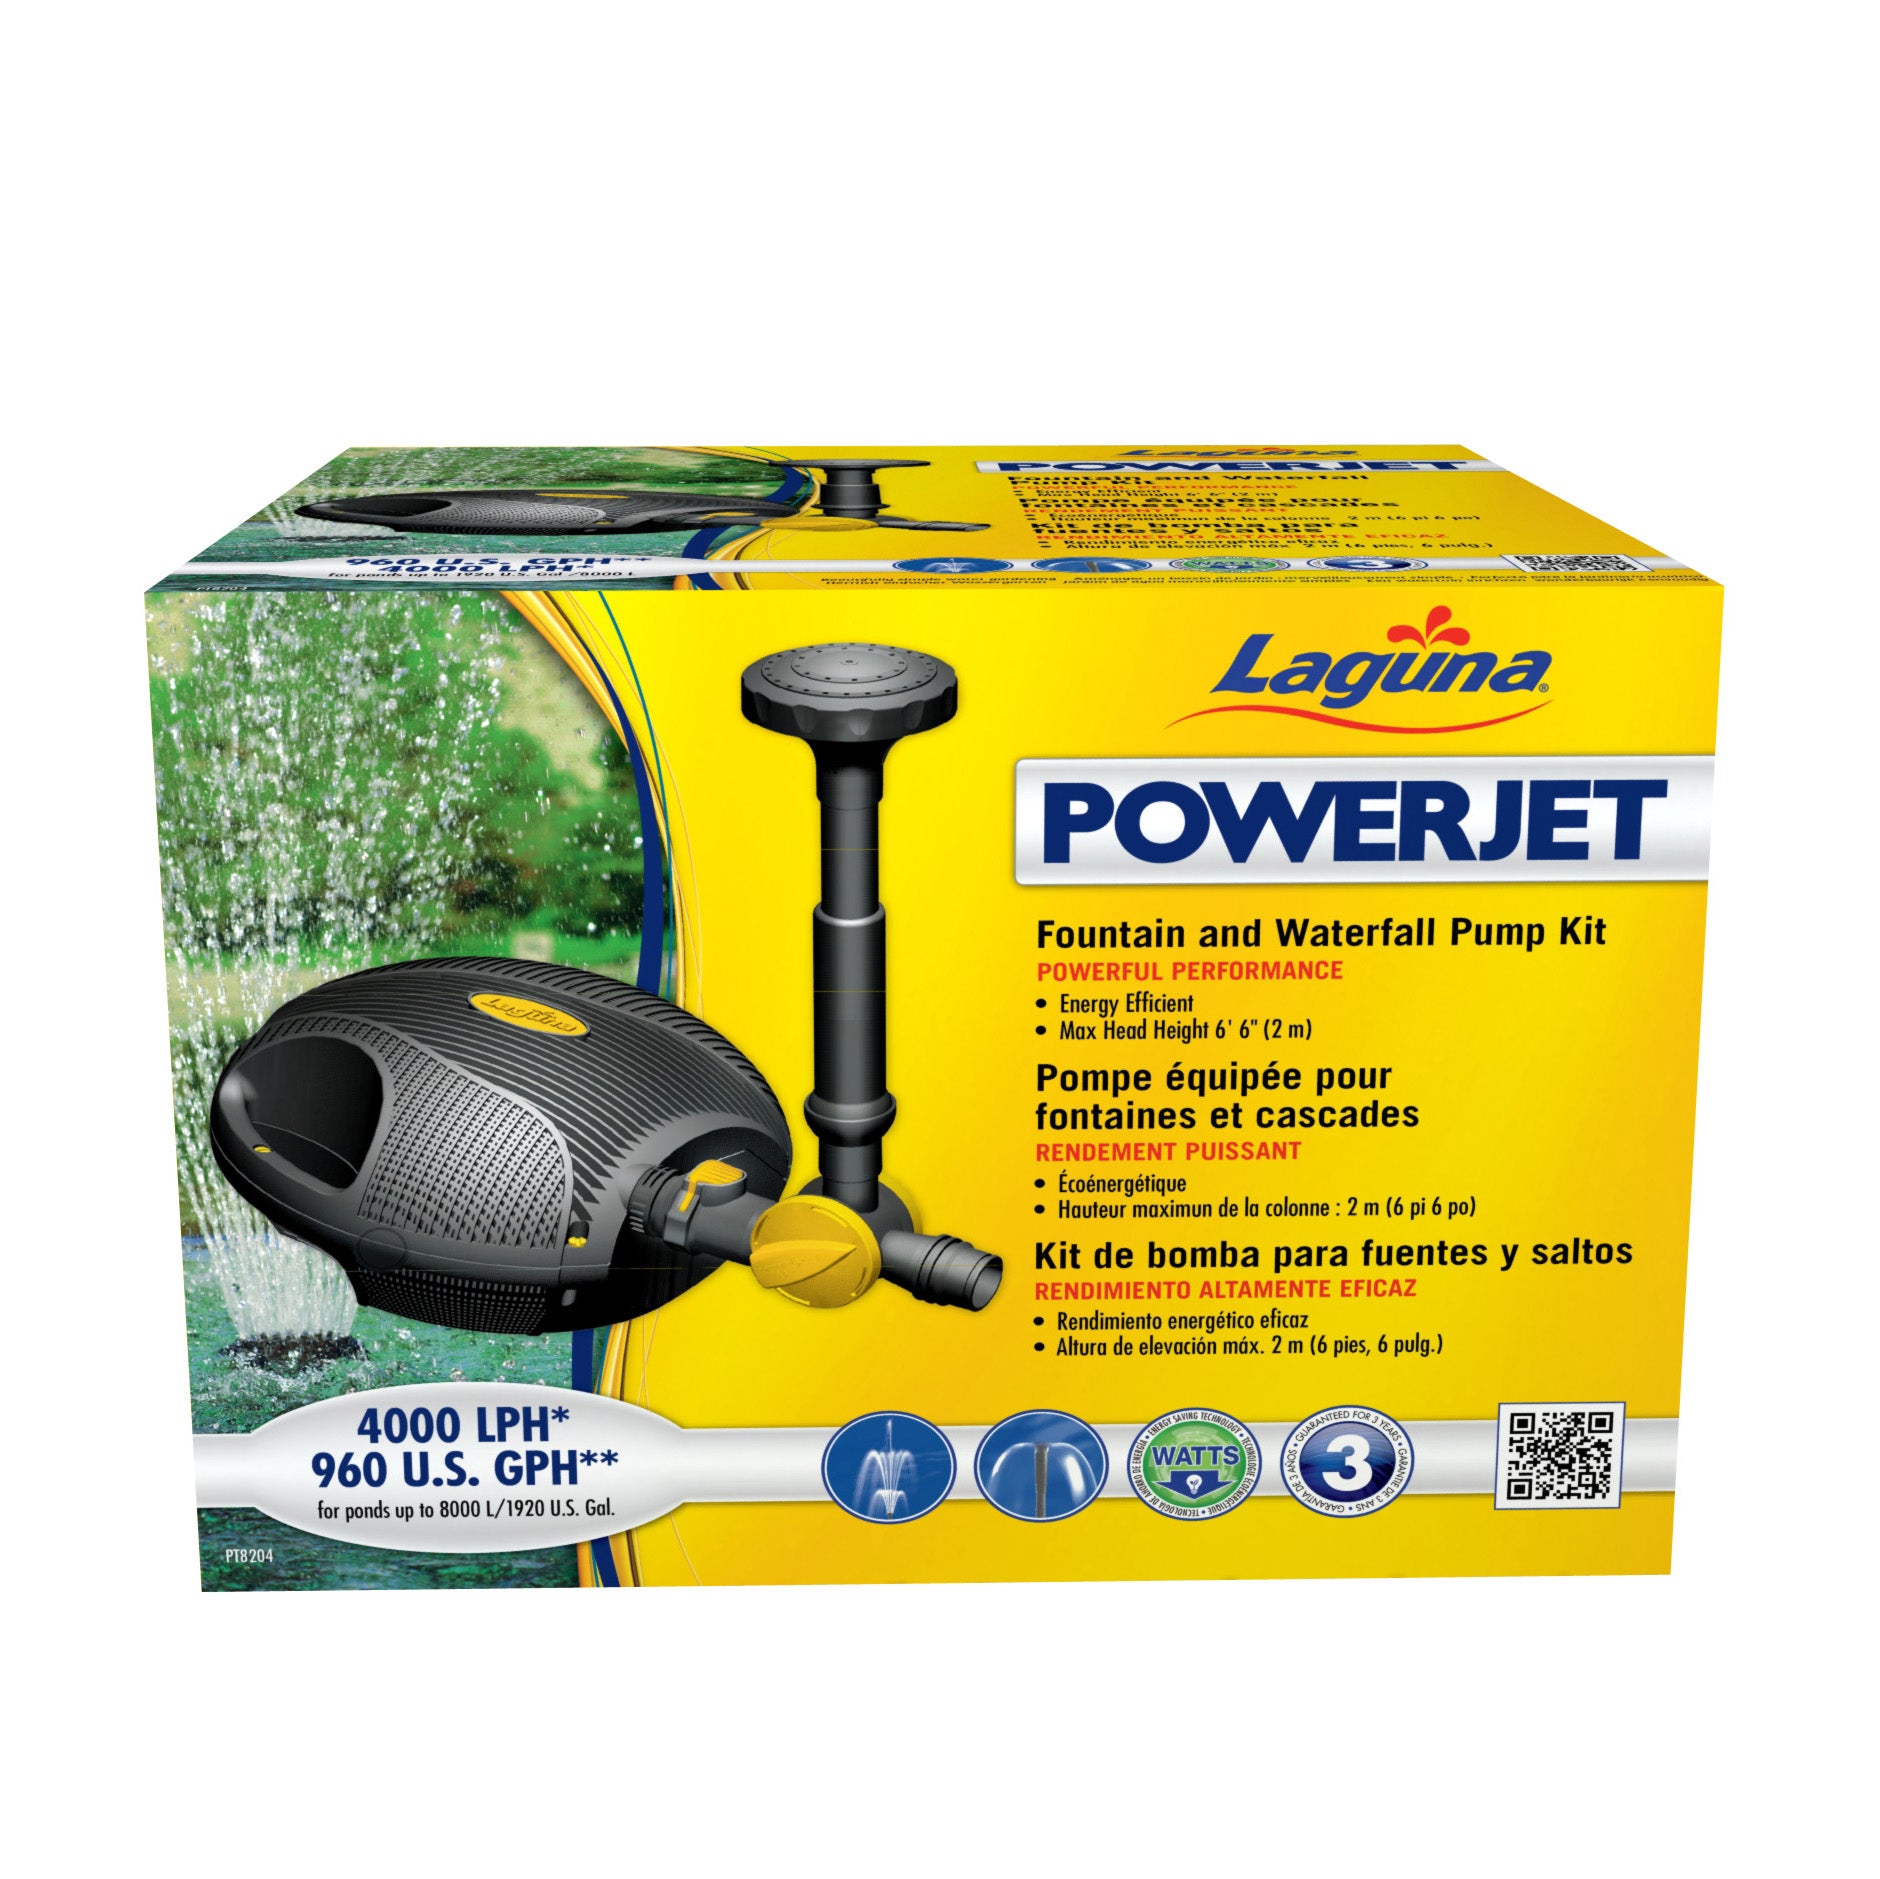 Laguna PowerJet 960 Fountain/Waterfall Pump Kit - For ponds up to 2000 U.S. gal (8000 L)